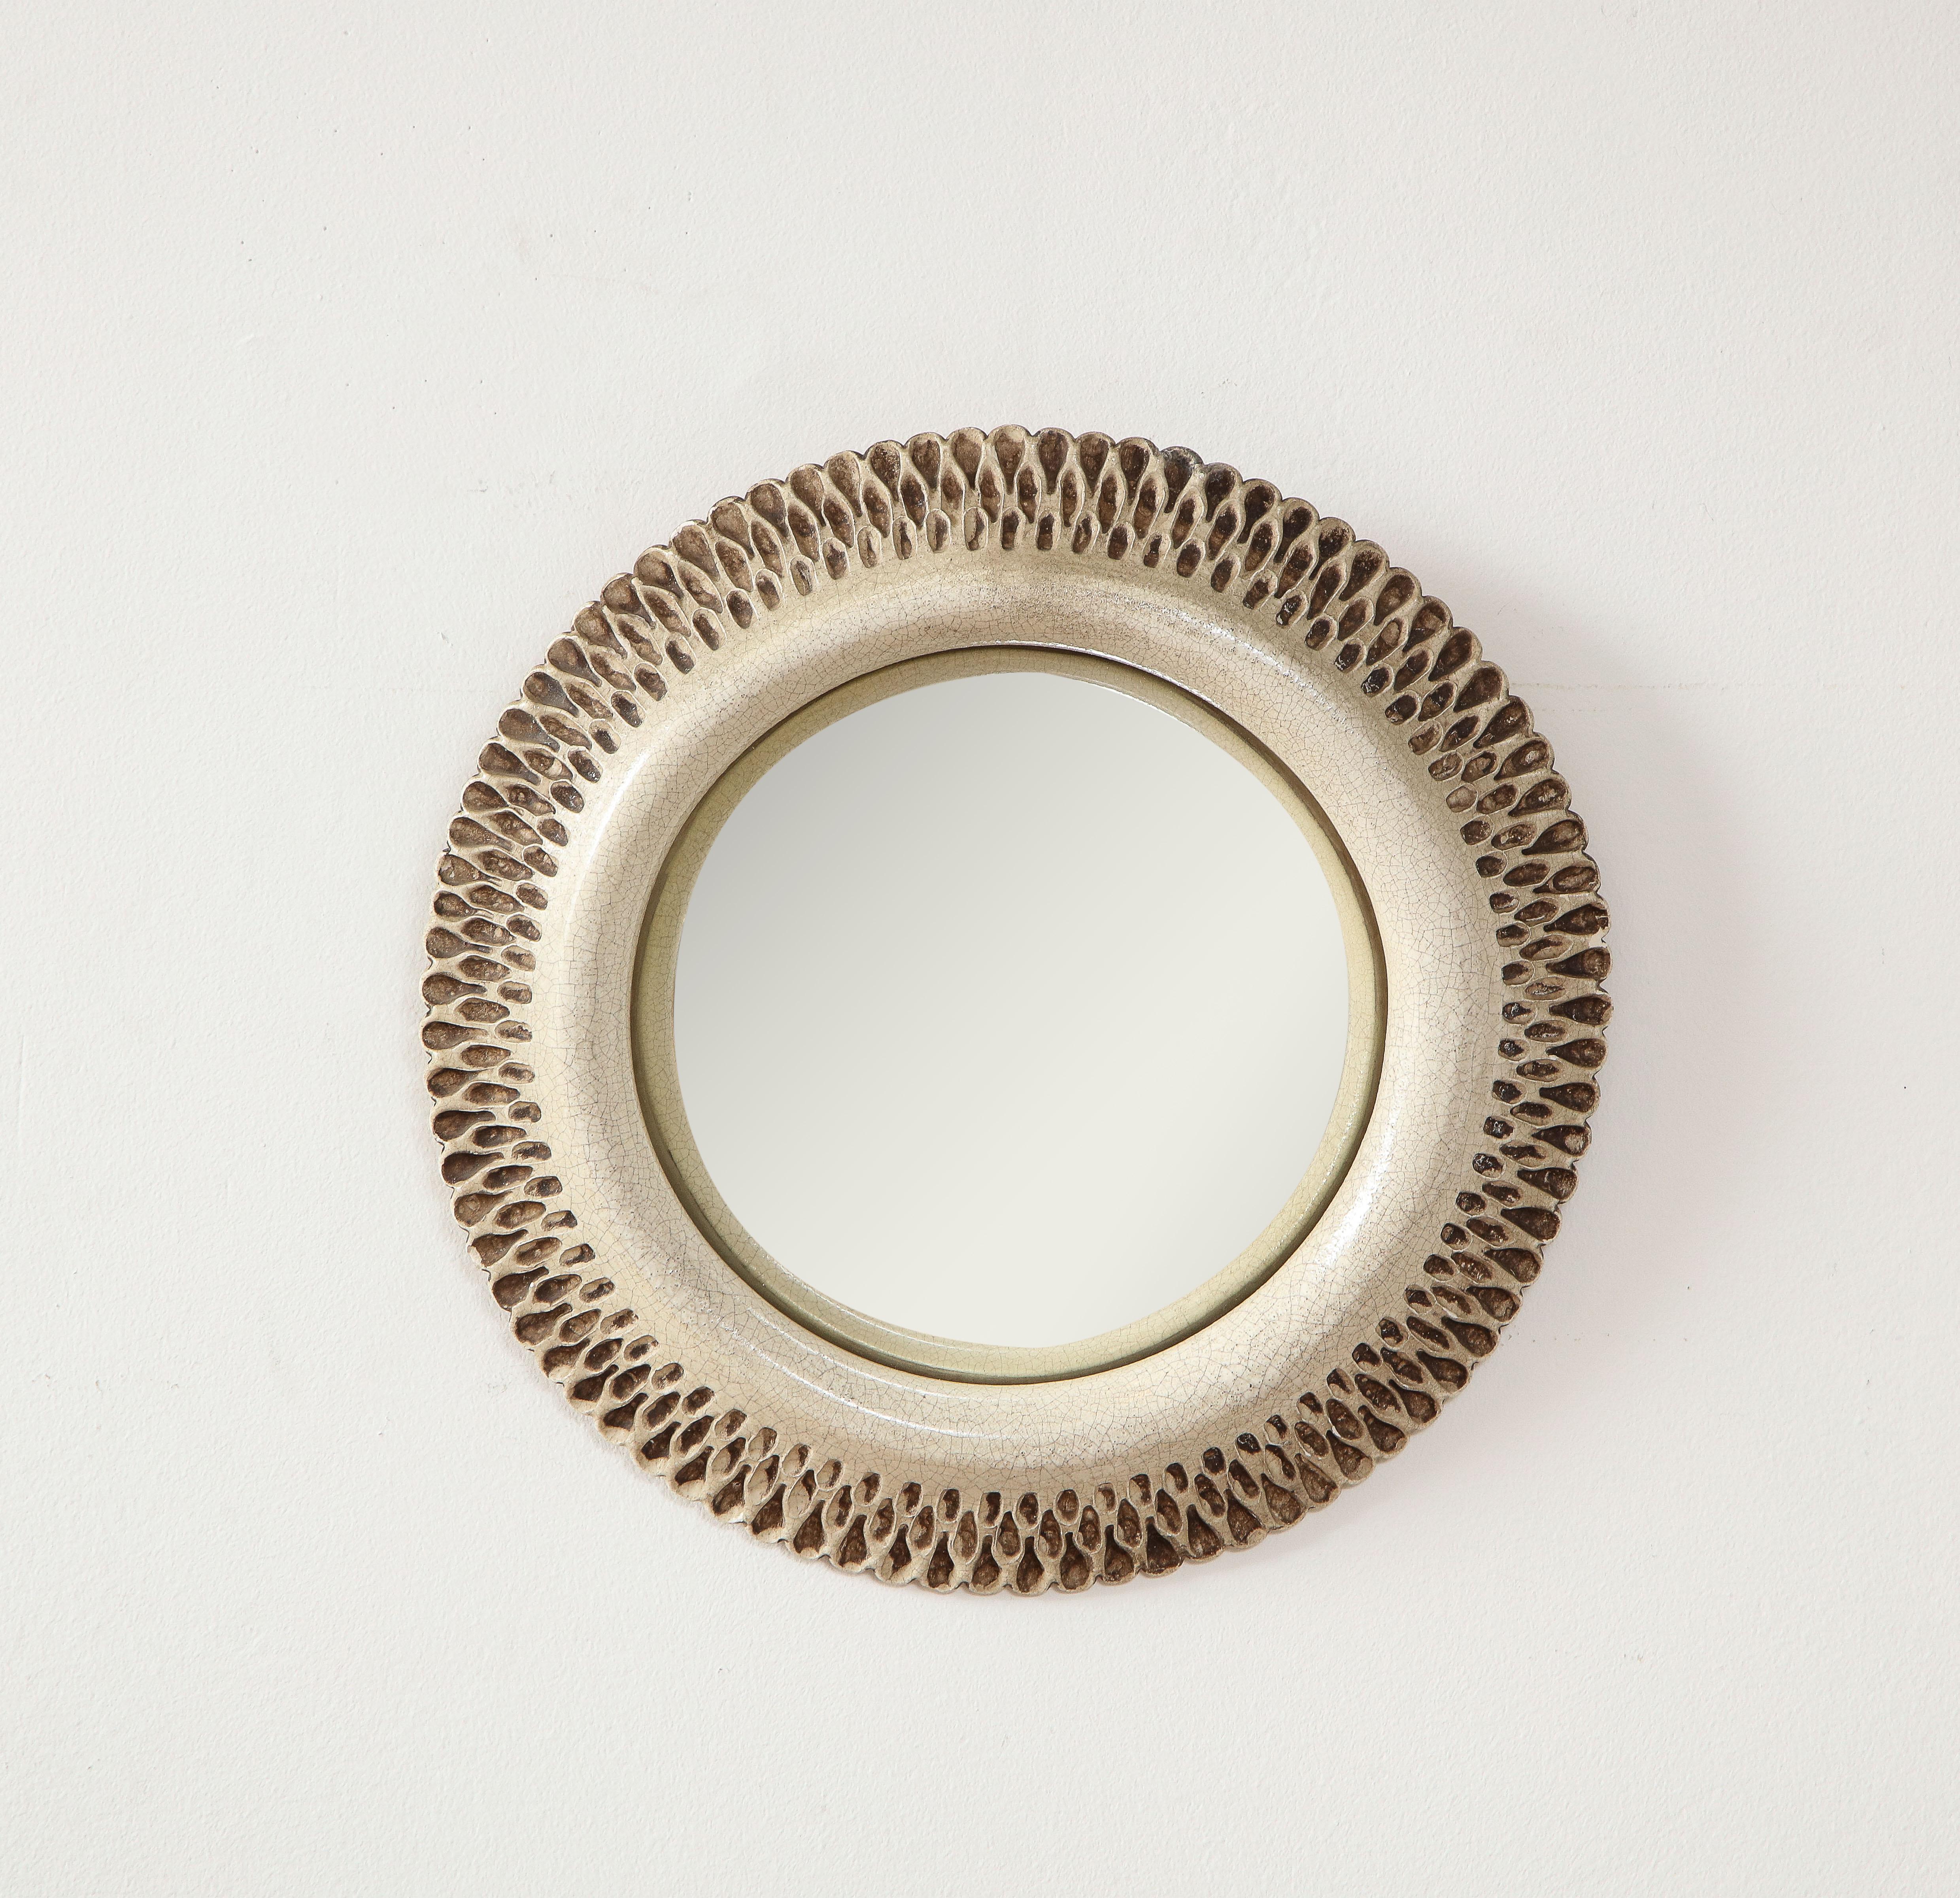 Jean Besnard convex mirror, France, c. 1930-40's
Ceramic
Measure: Diameter 11.75 in.